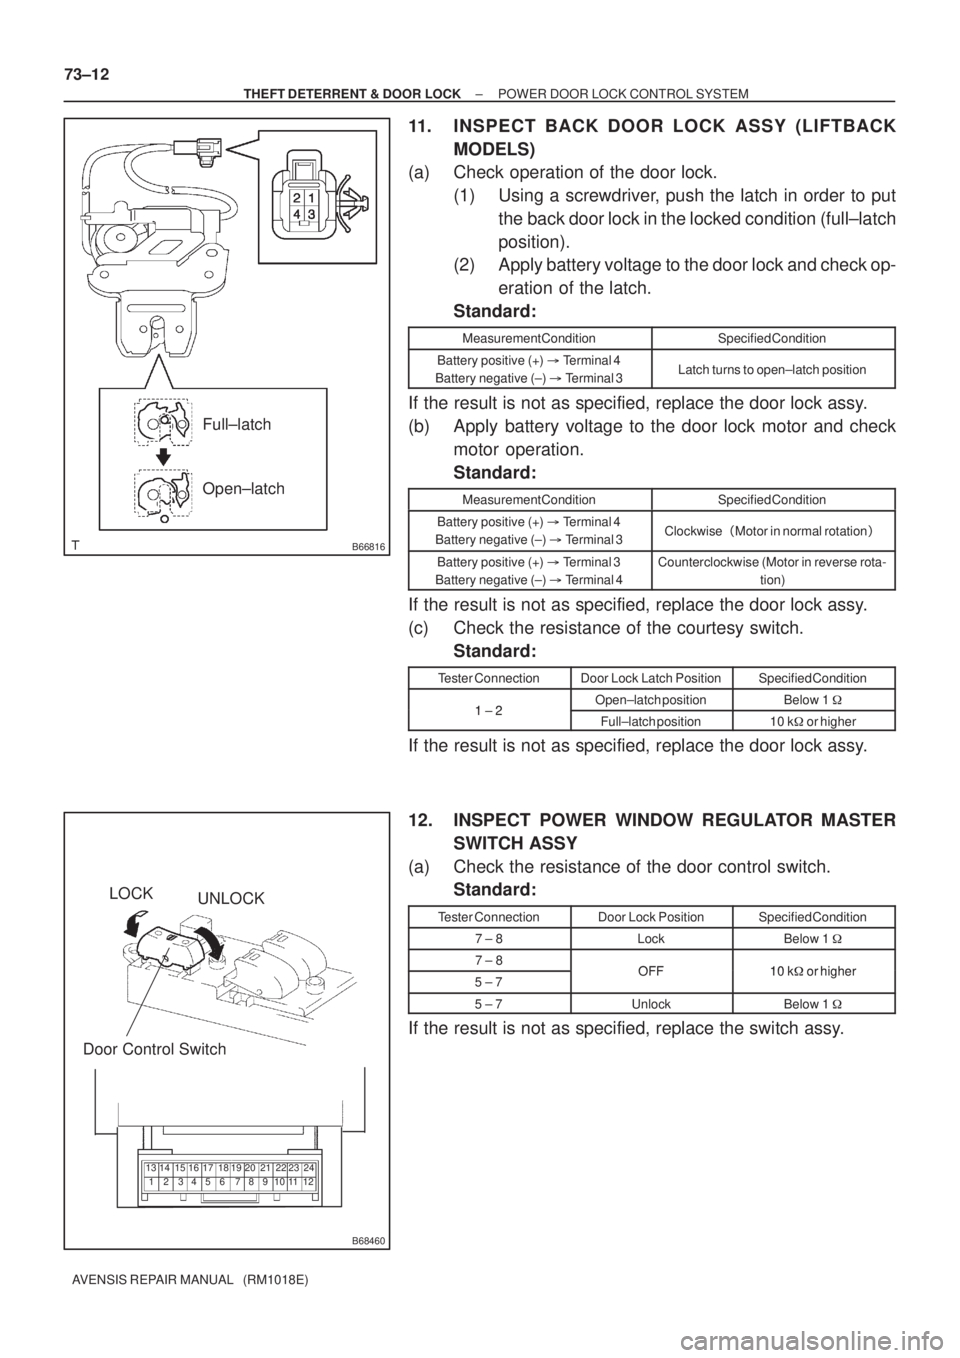 TOYOTA AVENSIS 2005  Service Repair Manual B66816
Full±latch
Open±latch
B68460
LOCK
UNLOCK
Door Control Switch
123 6 745 8918 19 22 2320 21 24
10 11 14 15
12 13 16 17
73±12
± THEFT DETERRENT & DOOR LOCKPOWER DOOR LOCK CONTROL SYSTEM
AVENSI